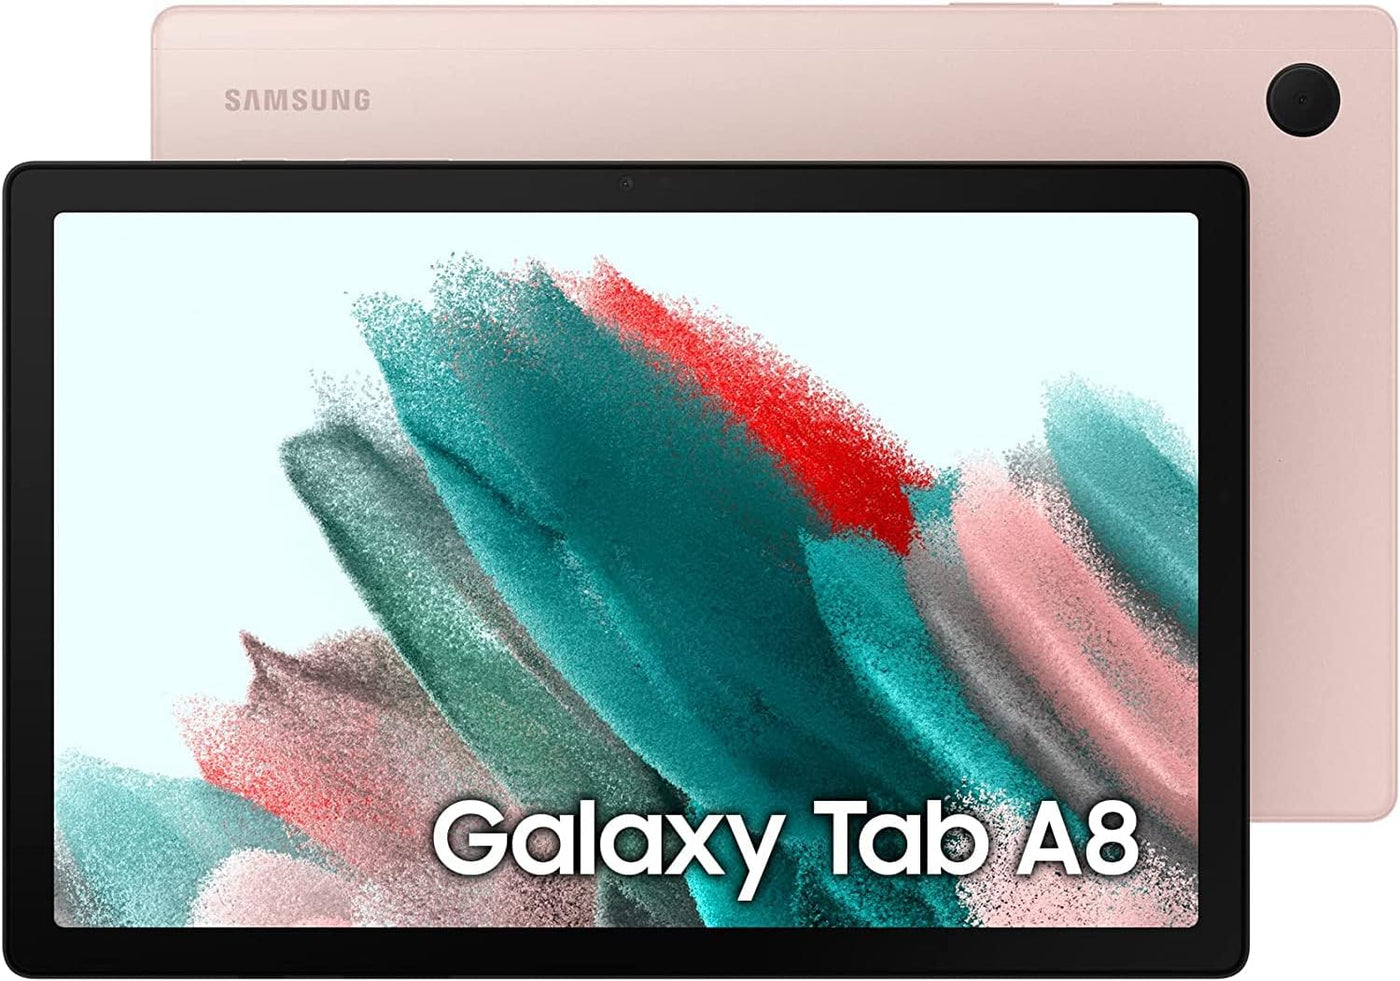 SAMSUNG Galaxy Tab A8 10.5” 32GB Android Tablet - $80